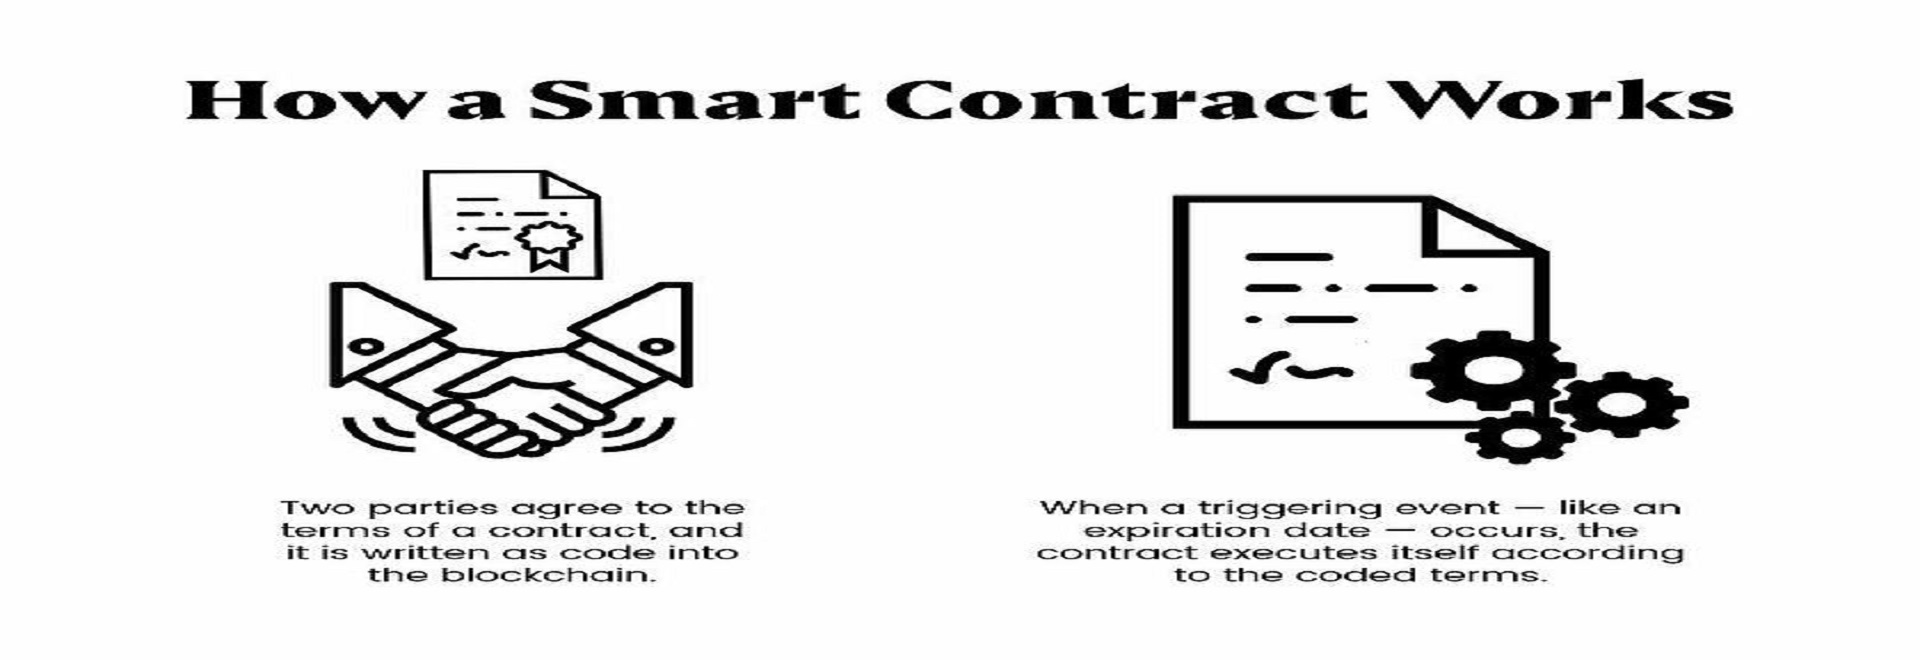 smart contract explained2 - صفحه اصلی